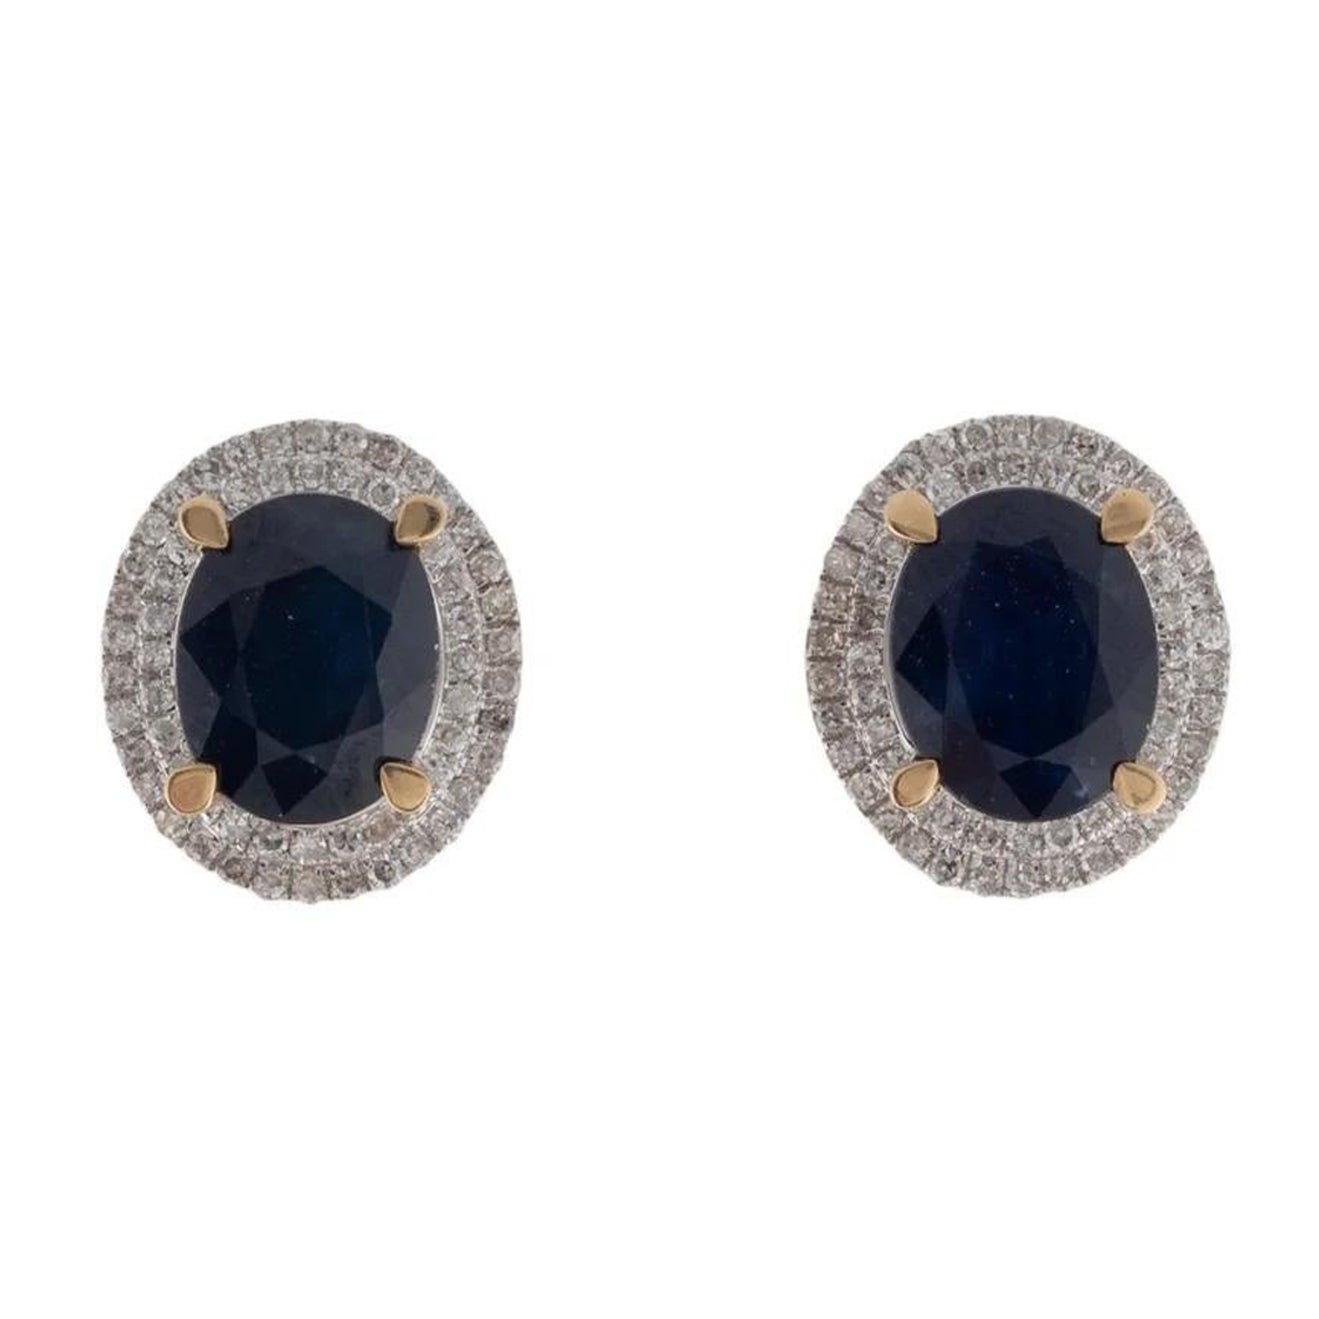 Designer 14K Sapphire & Diamond Stud Earrings, Statement Gemstone Jewelry